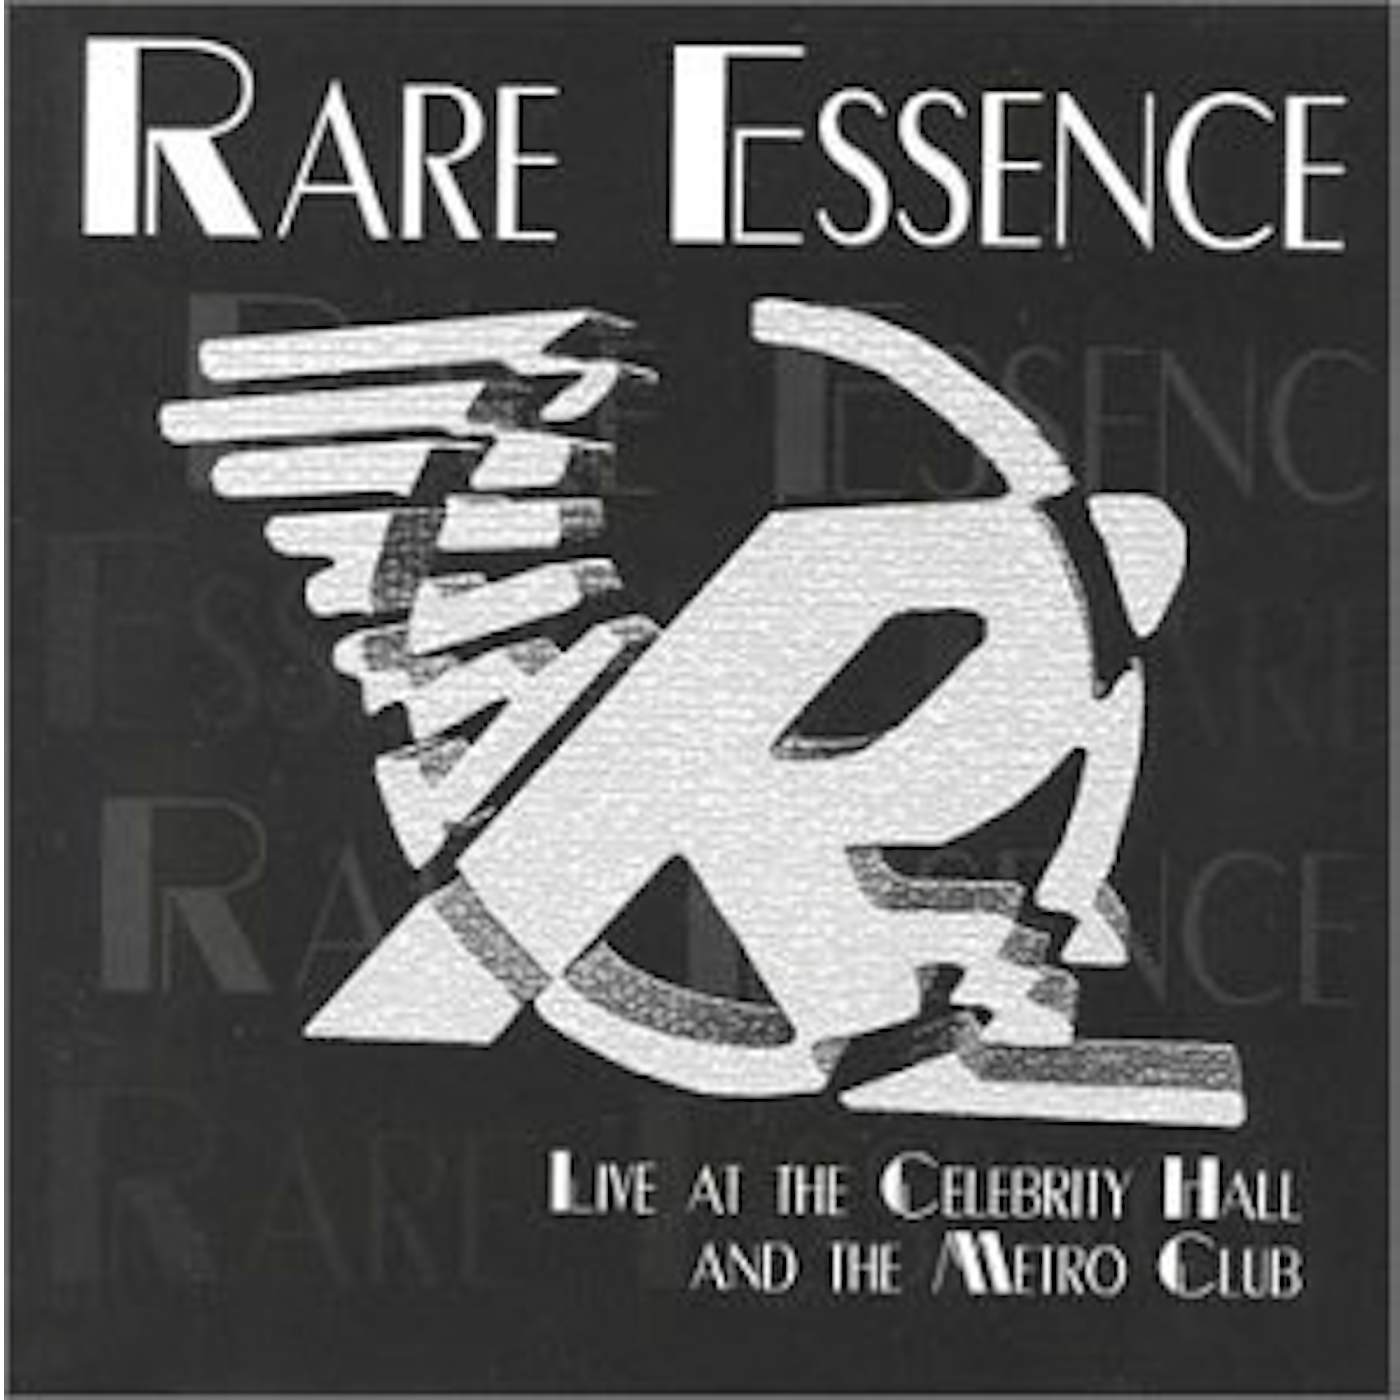 Rare Essence LIVE AT CELEBRITY HALL & METRO CD